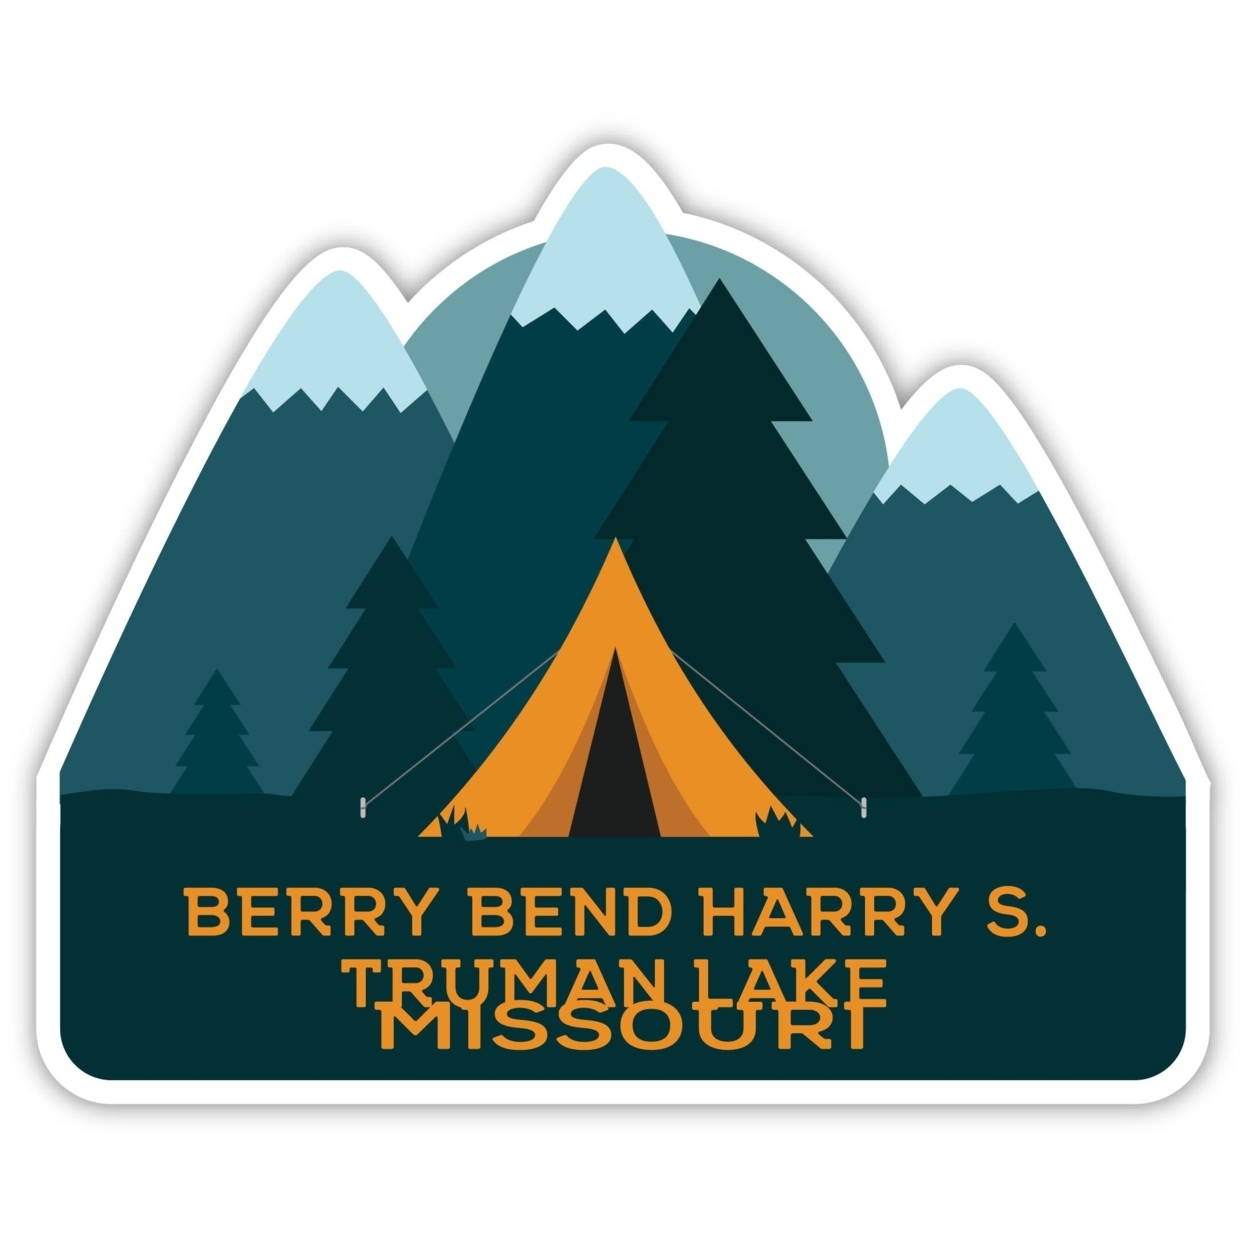 Berry Bend Harry S. Truman Lake Missouri Souvenir Decorative Stickers (Choose Theme And Size) - Single Unit, 4-Inch, Tent